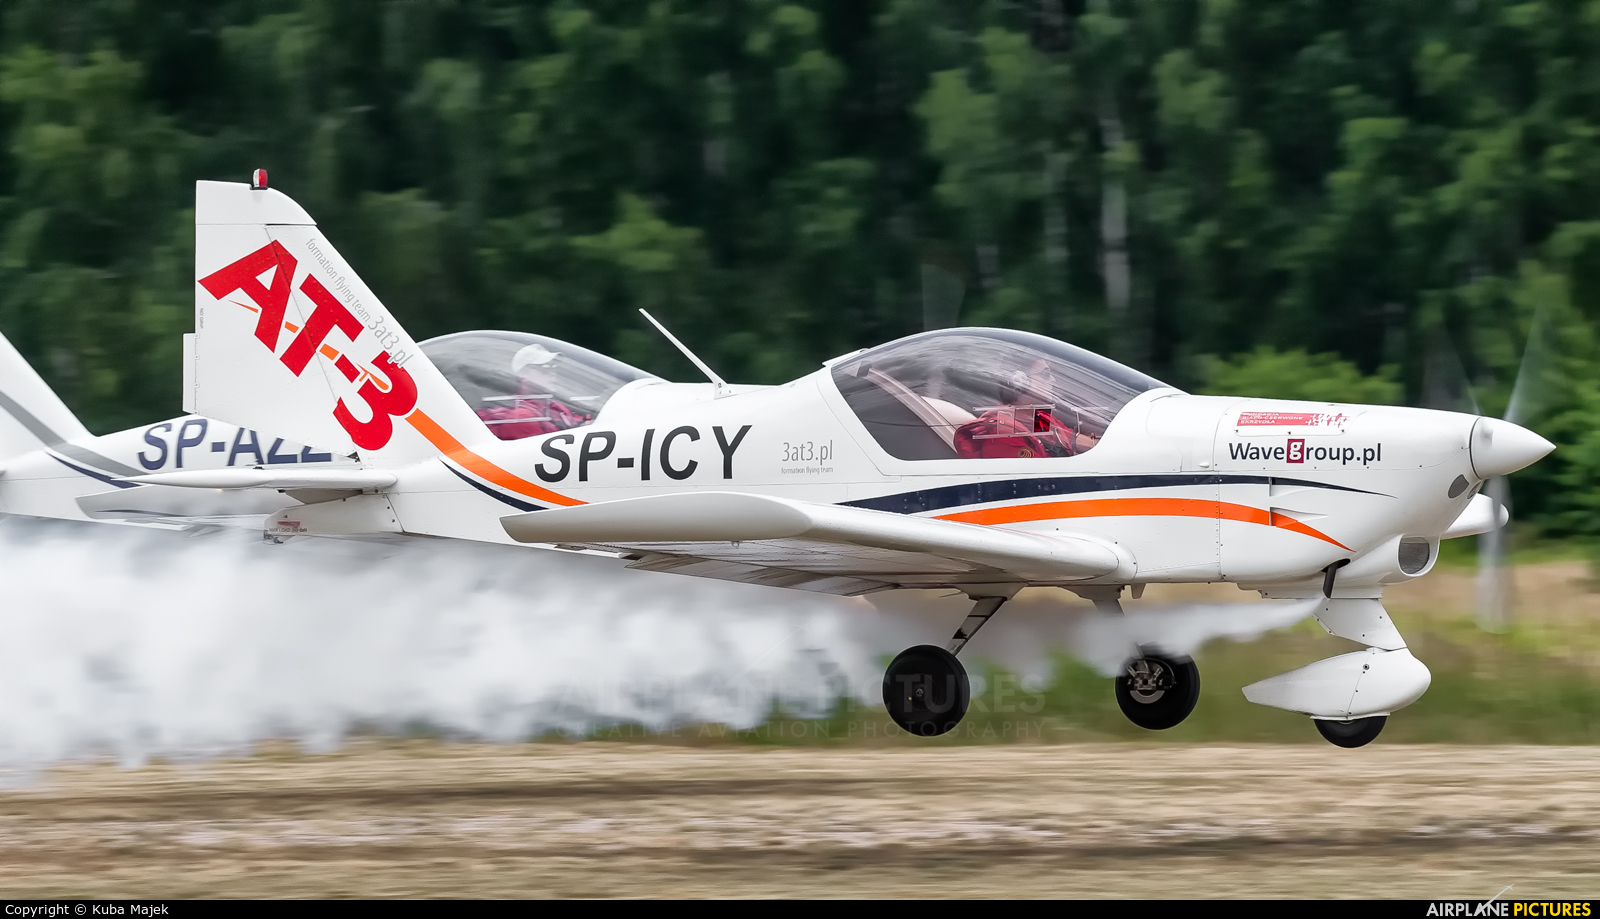 3AT3 Formation Flying Team SP-ICY aircraft at Sobienie Królewskie